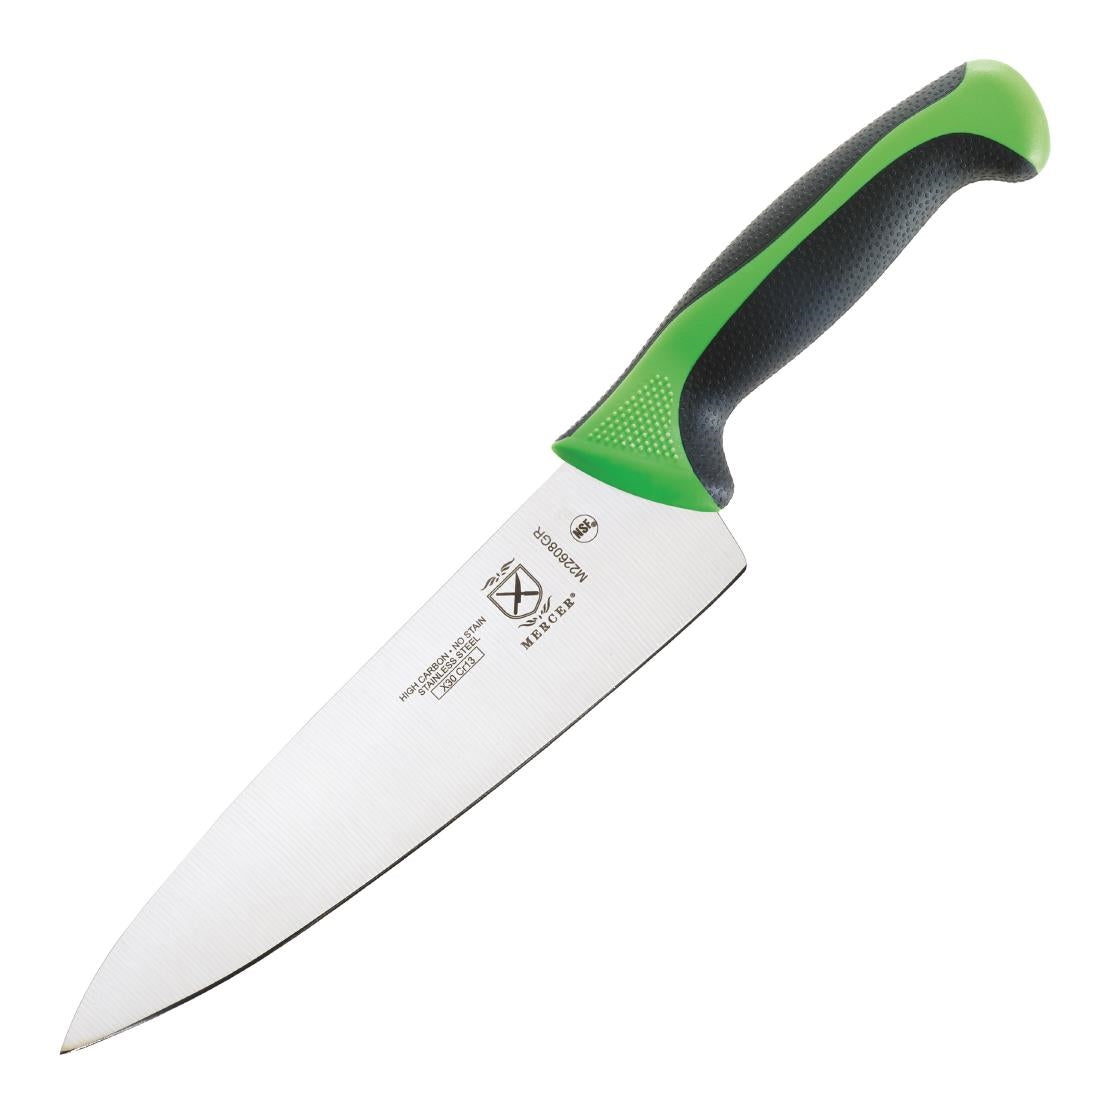 Mercer Culinary Millenia Chefs Knife Green 20.3cm